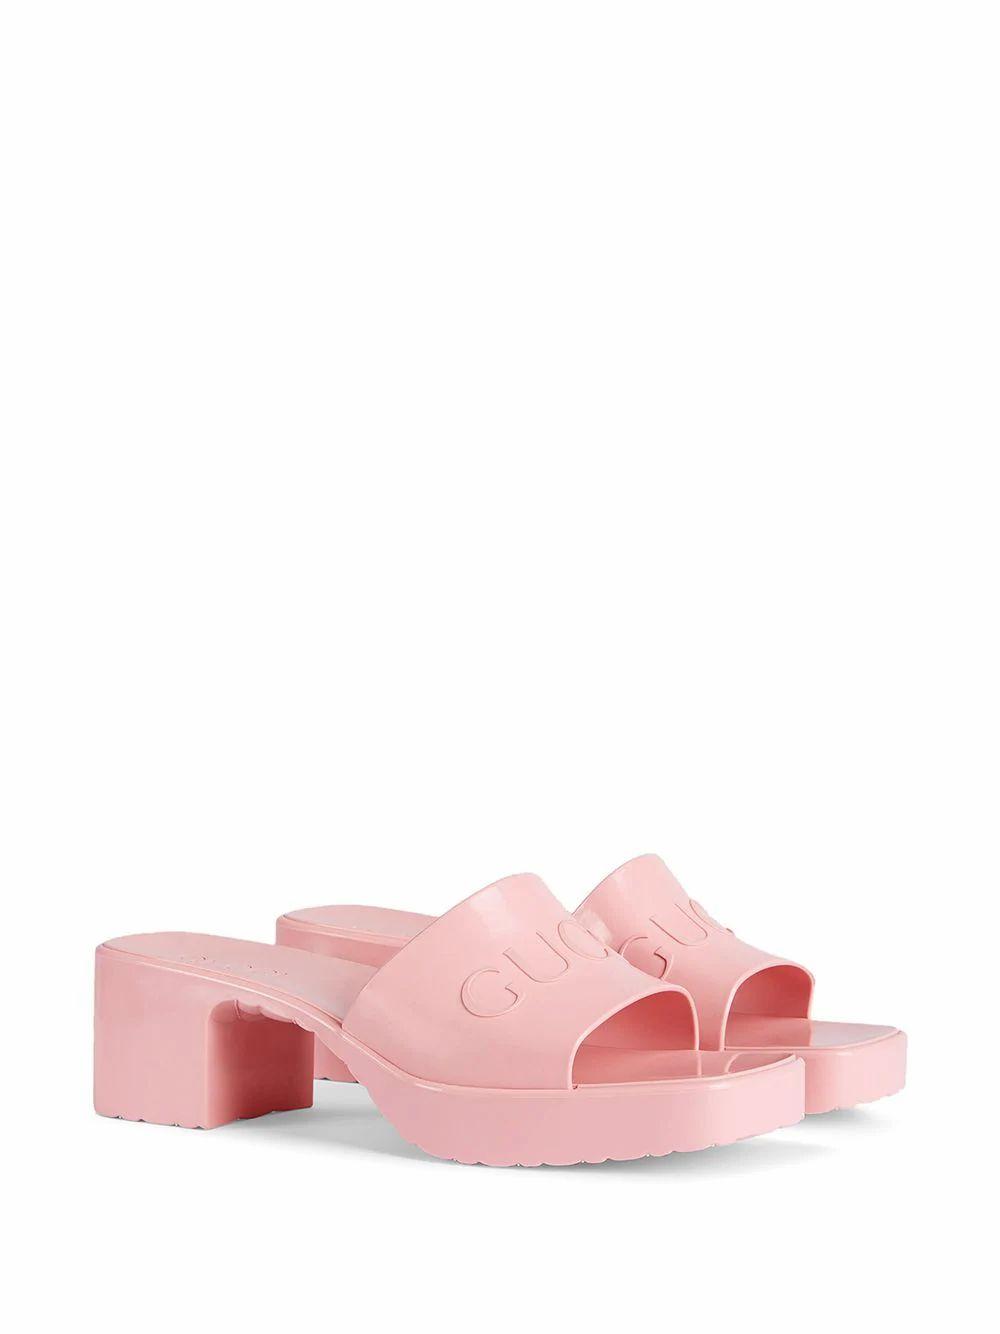 Gucci Rubber Slide Sandal in Pink | Lyst